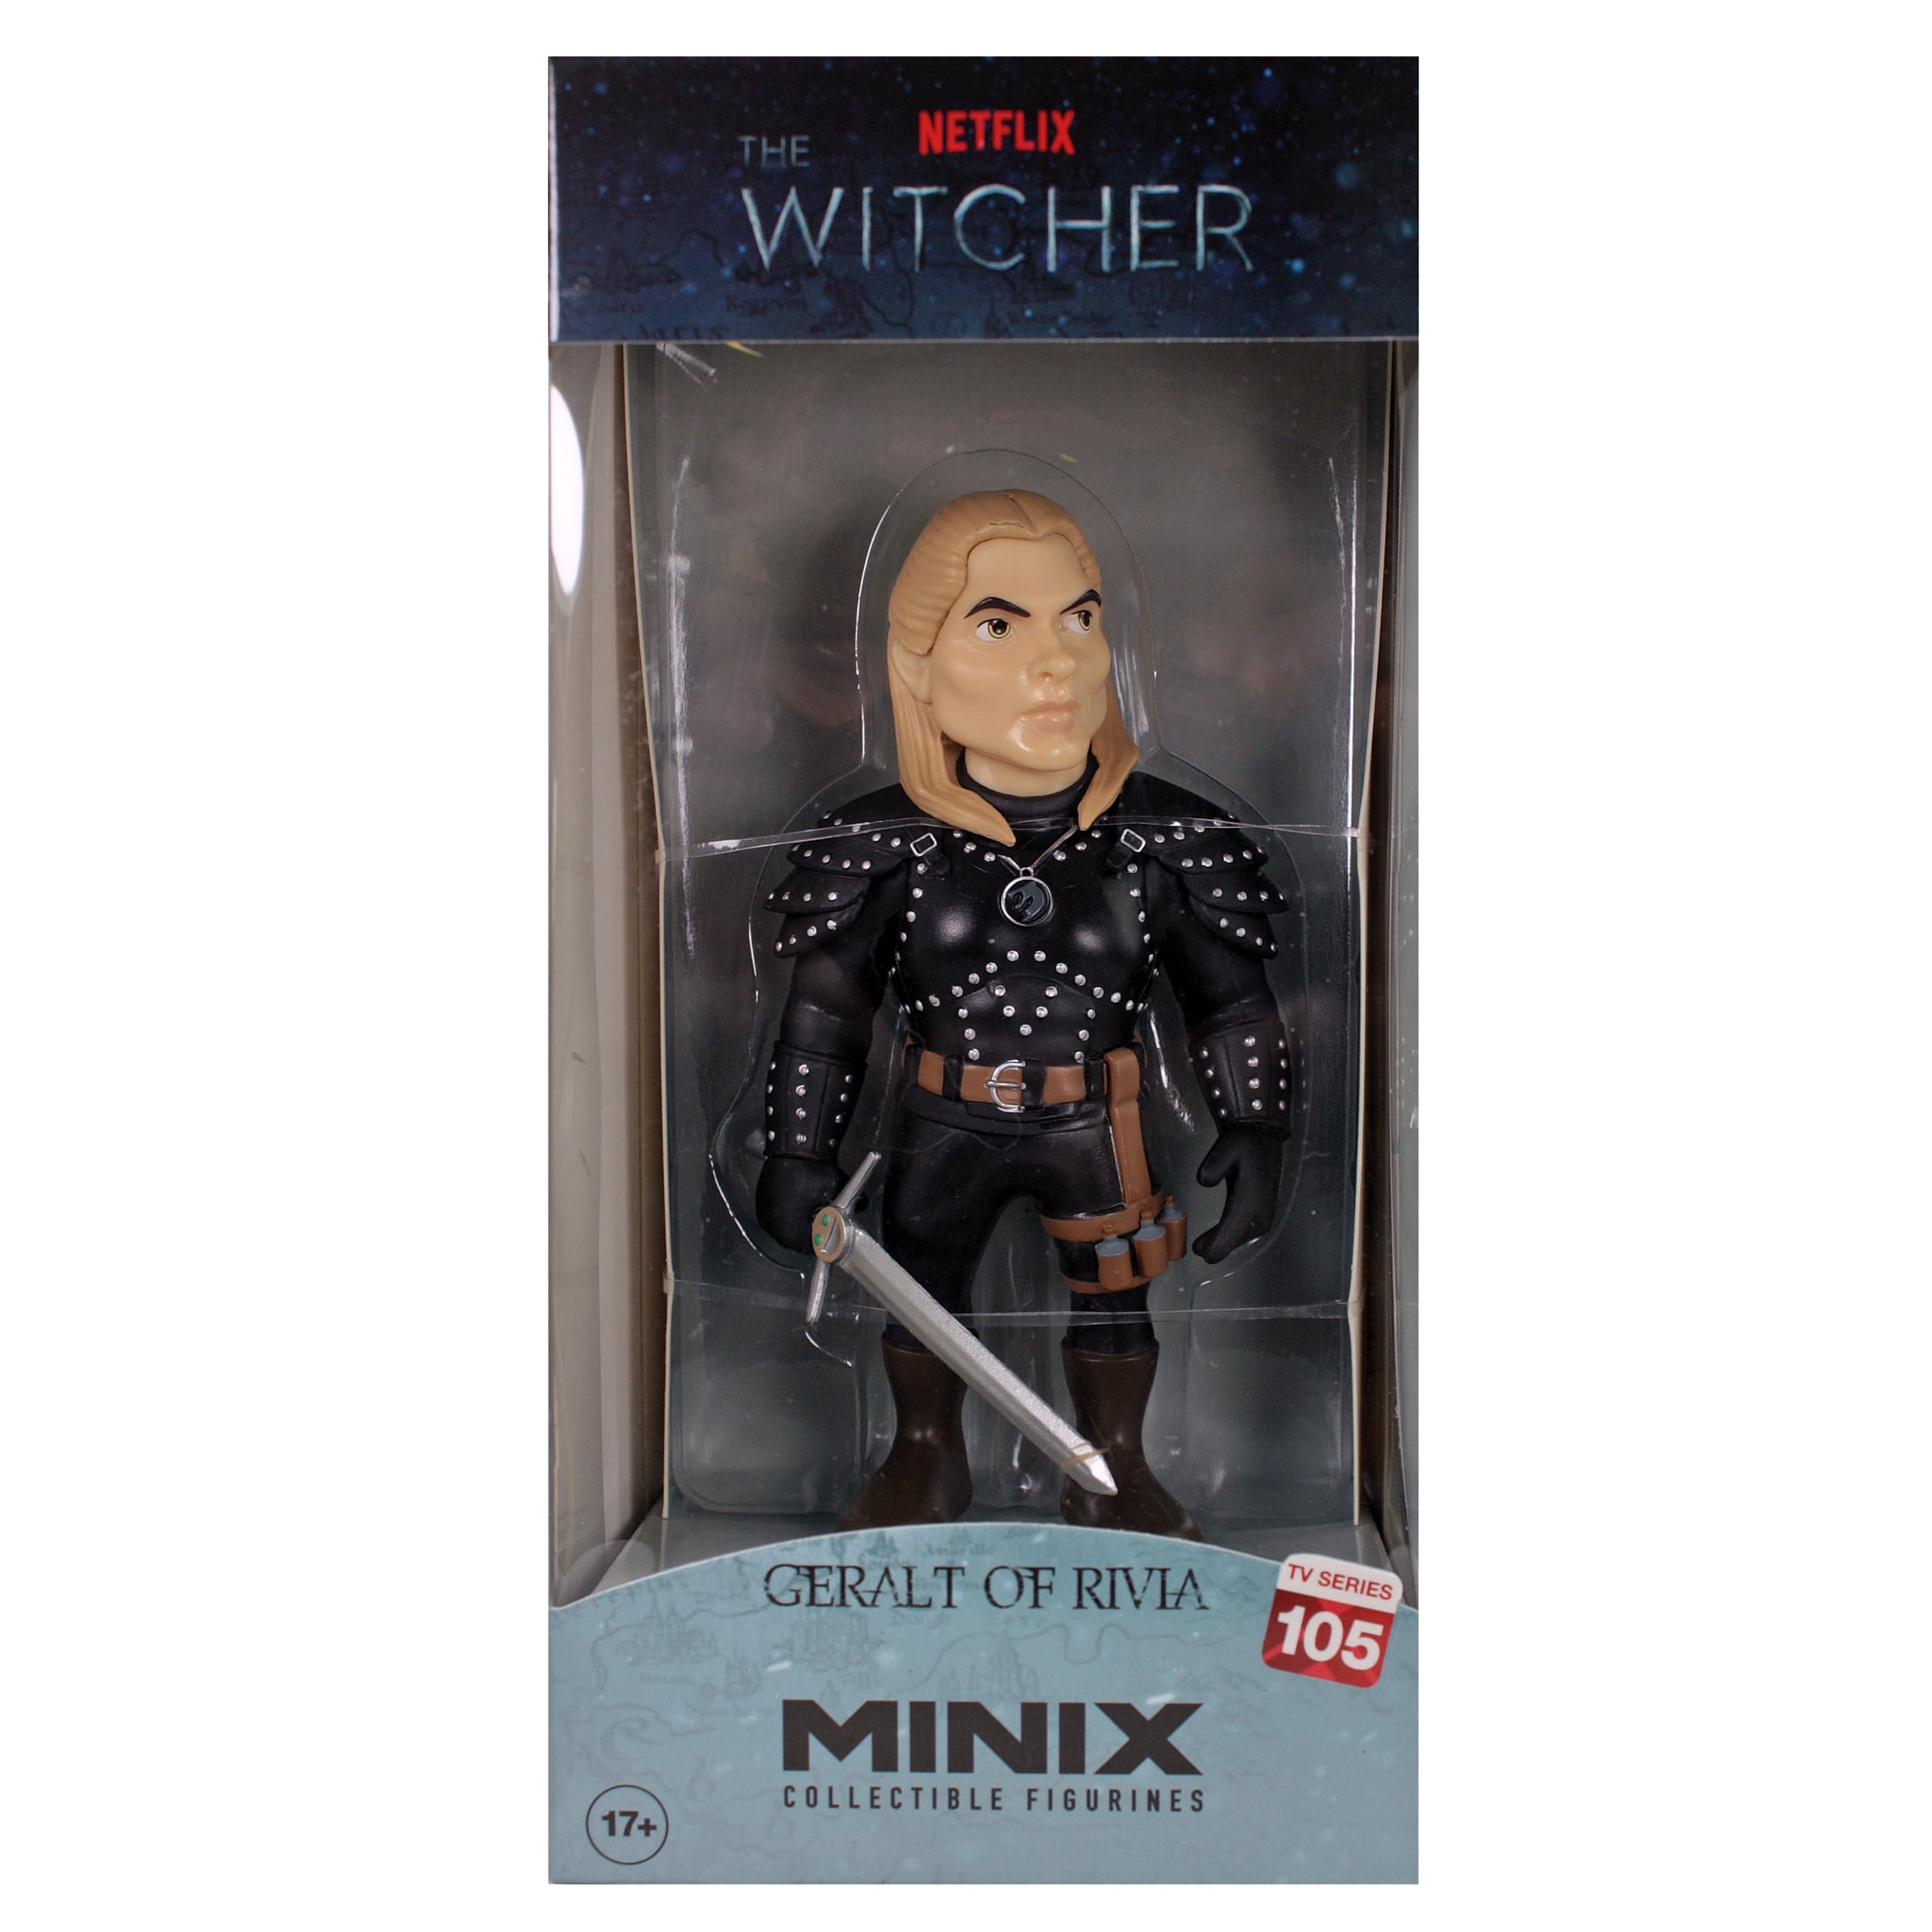 Mego Minix Figures - The Witcher: Geralt of Rivia 